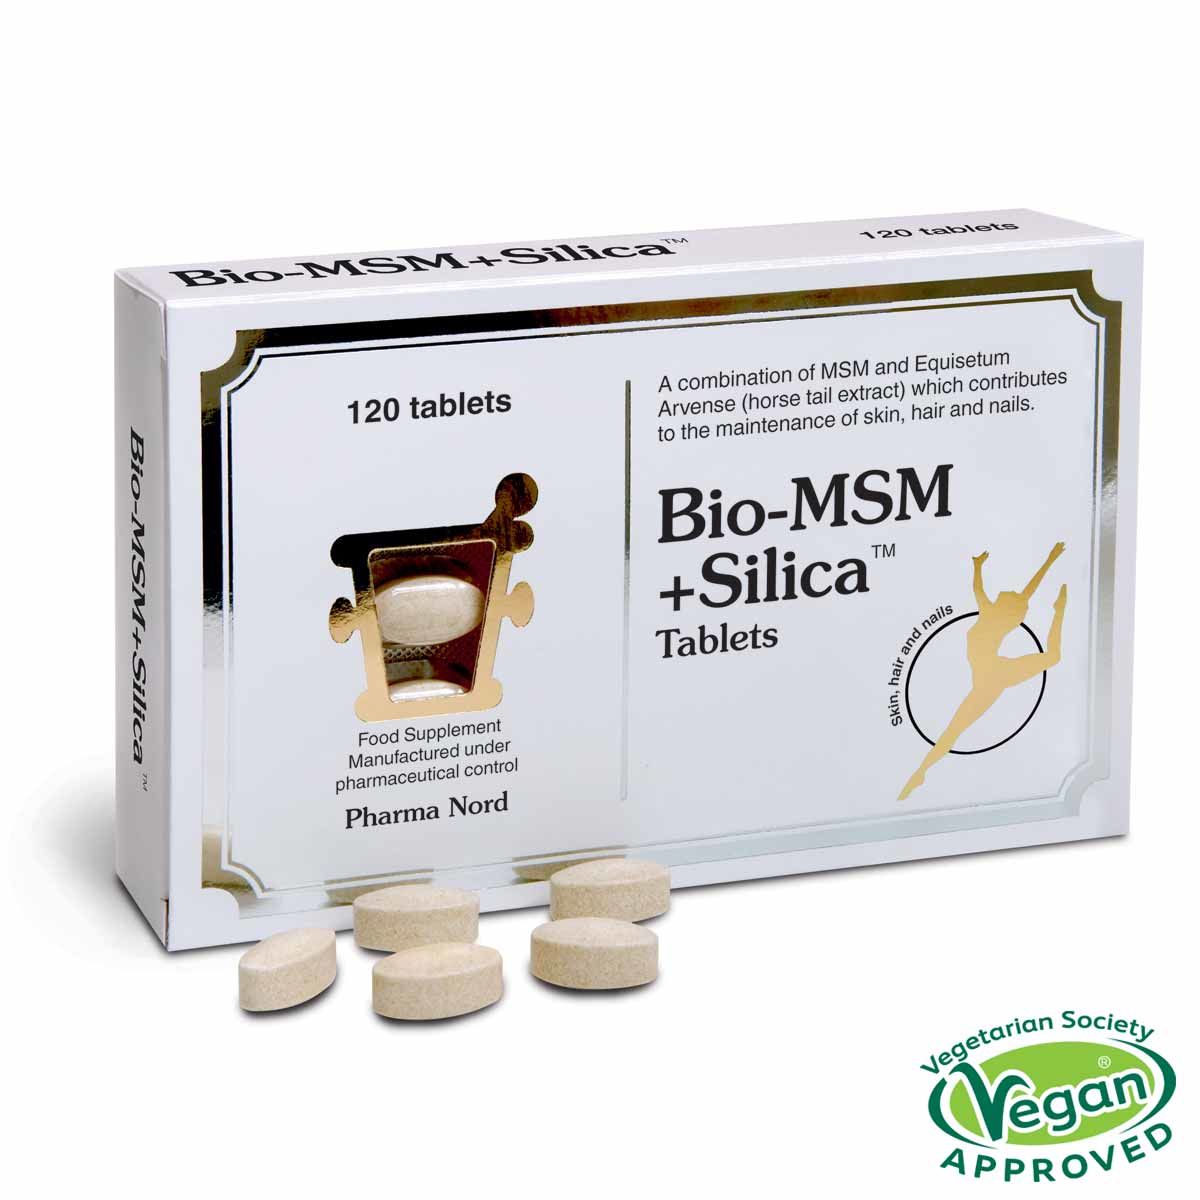 Bio-MSM +Silica